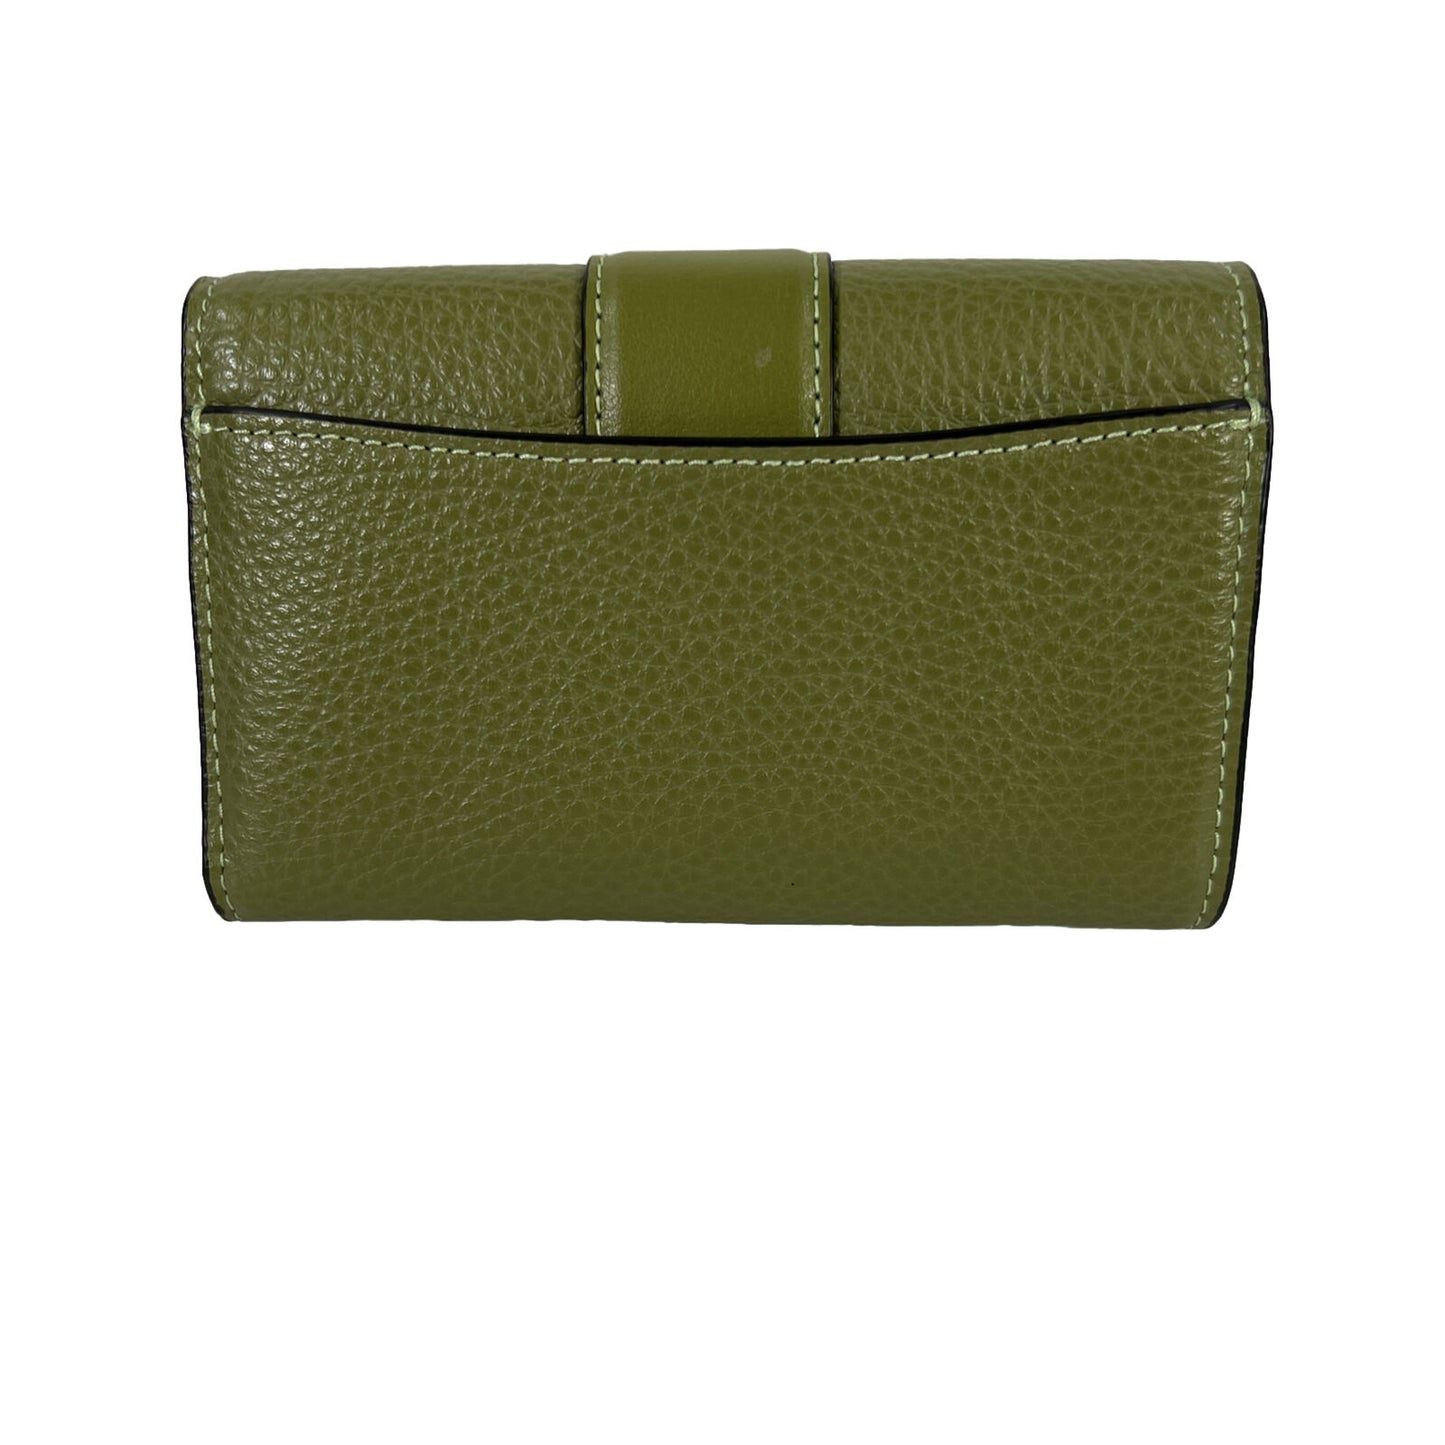 NEW Coach Green Leather Medium Grace Wallet